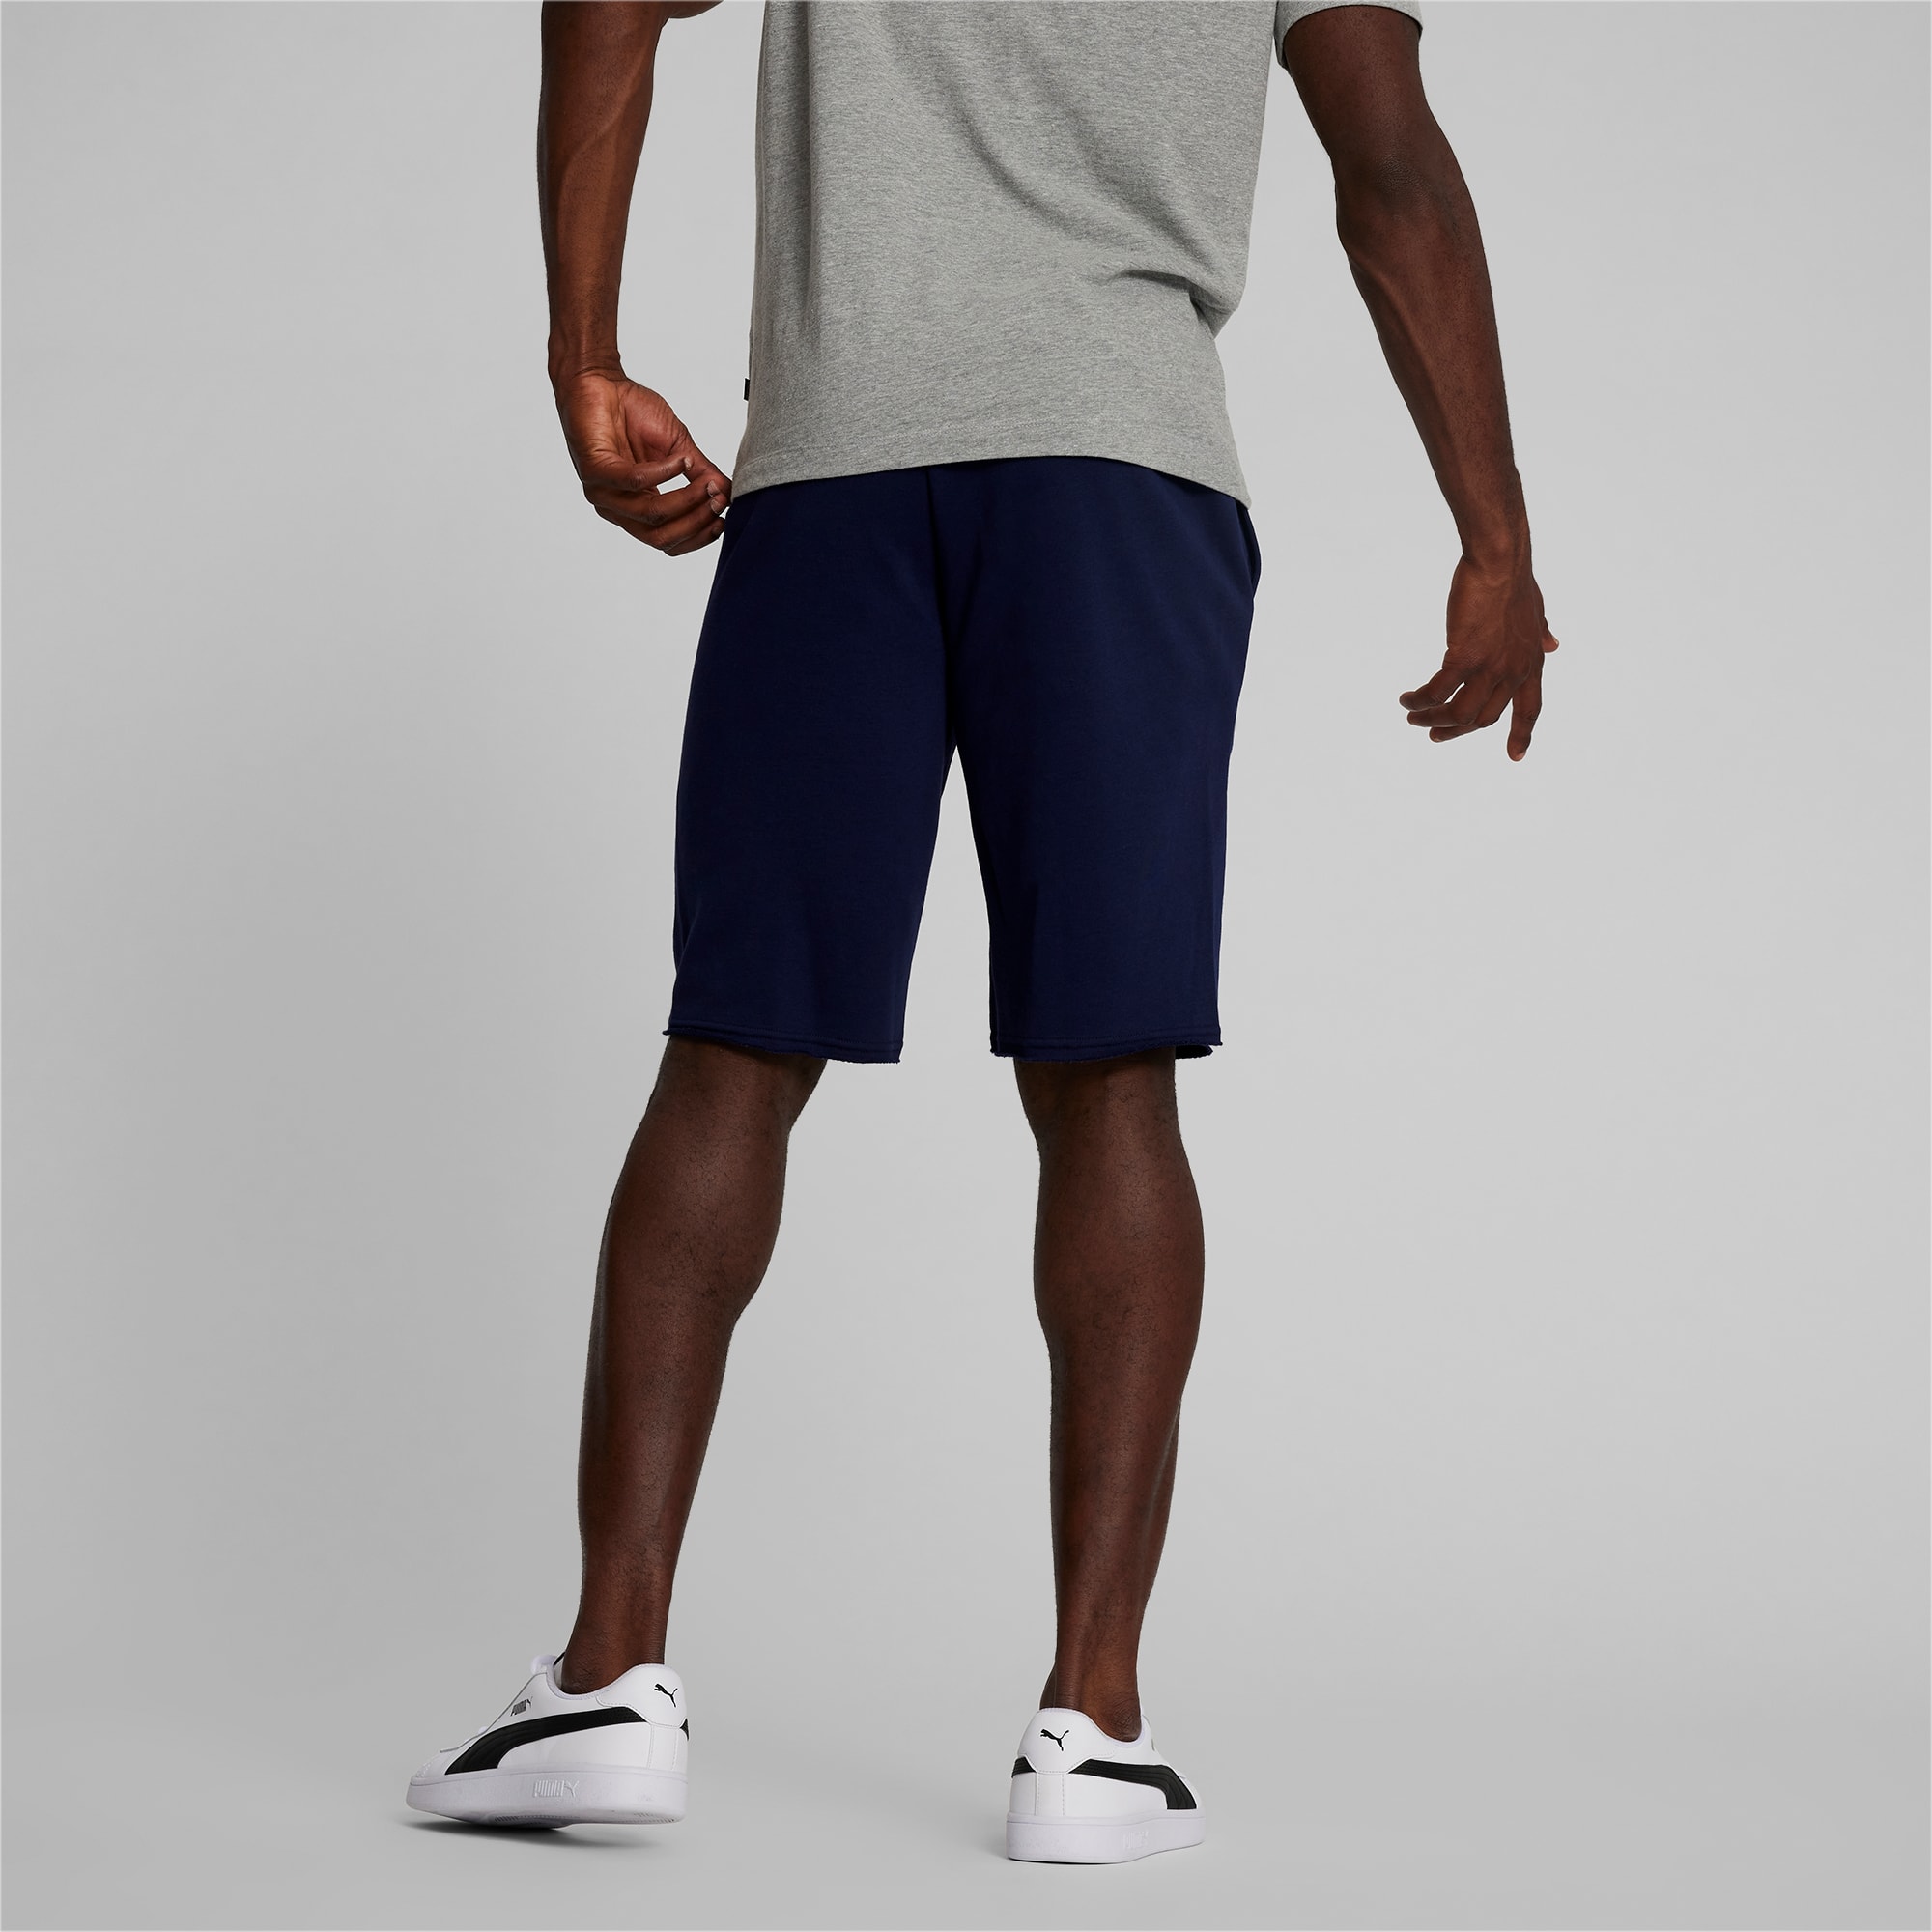 Puma Brand Love All Over Print White Shorts Men's size Large 533669 02 New